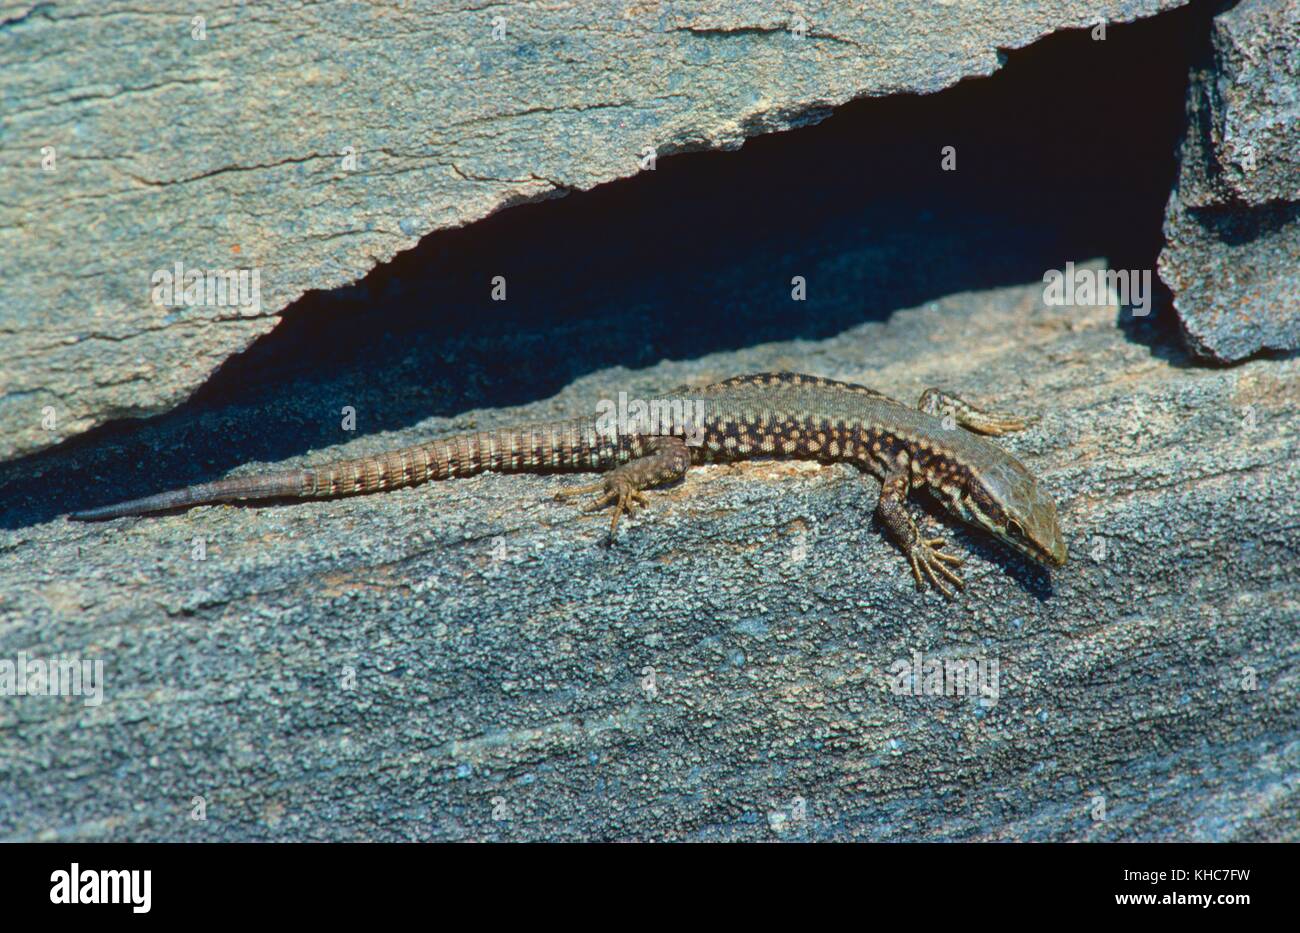 Common wall lizard, Podarcis muralis, Lacertidae, Lizard, reptile, animal, Raron, Canton of Valais, Switzerland *** Local Caption *** Common wall liza Stock Photo